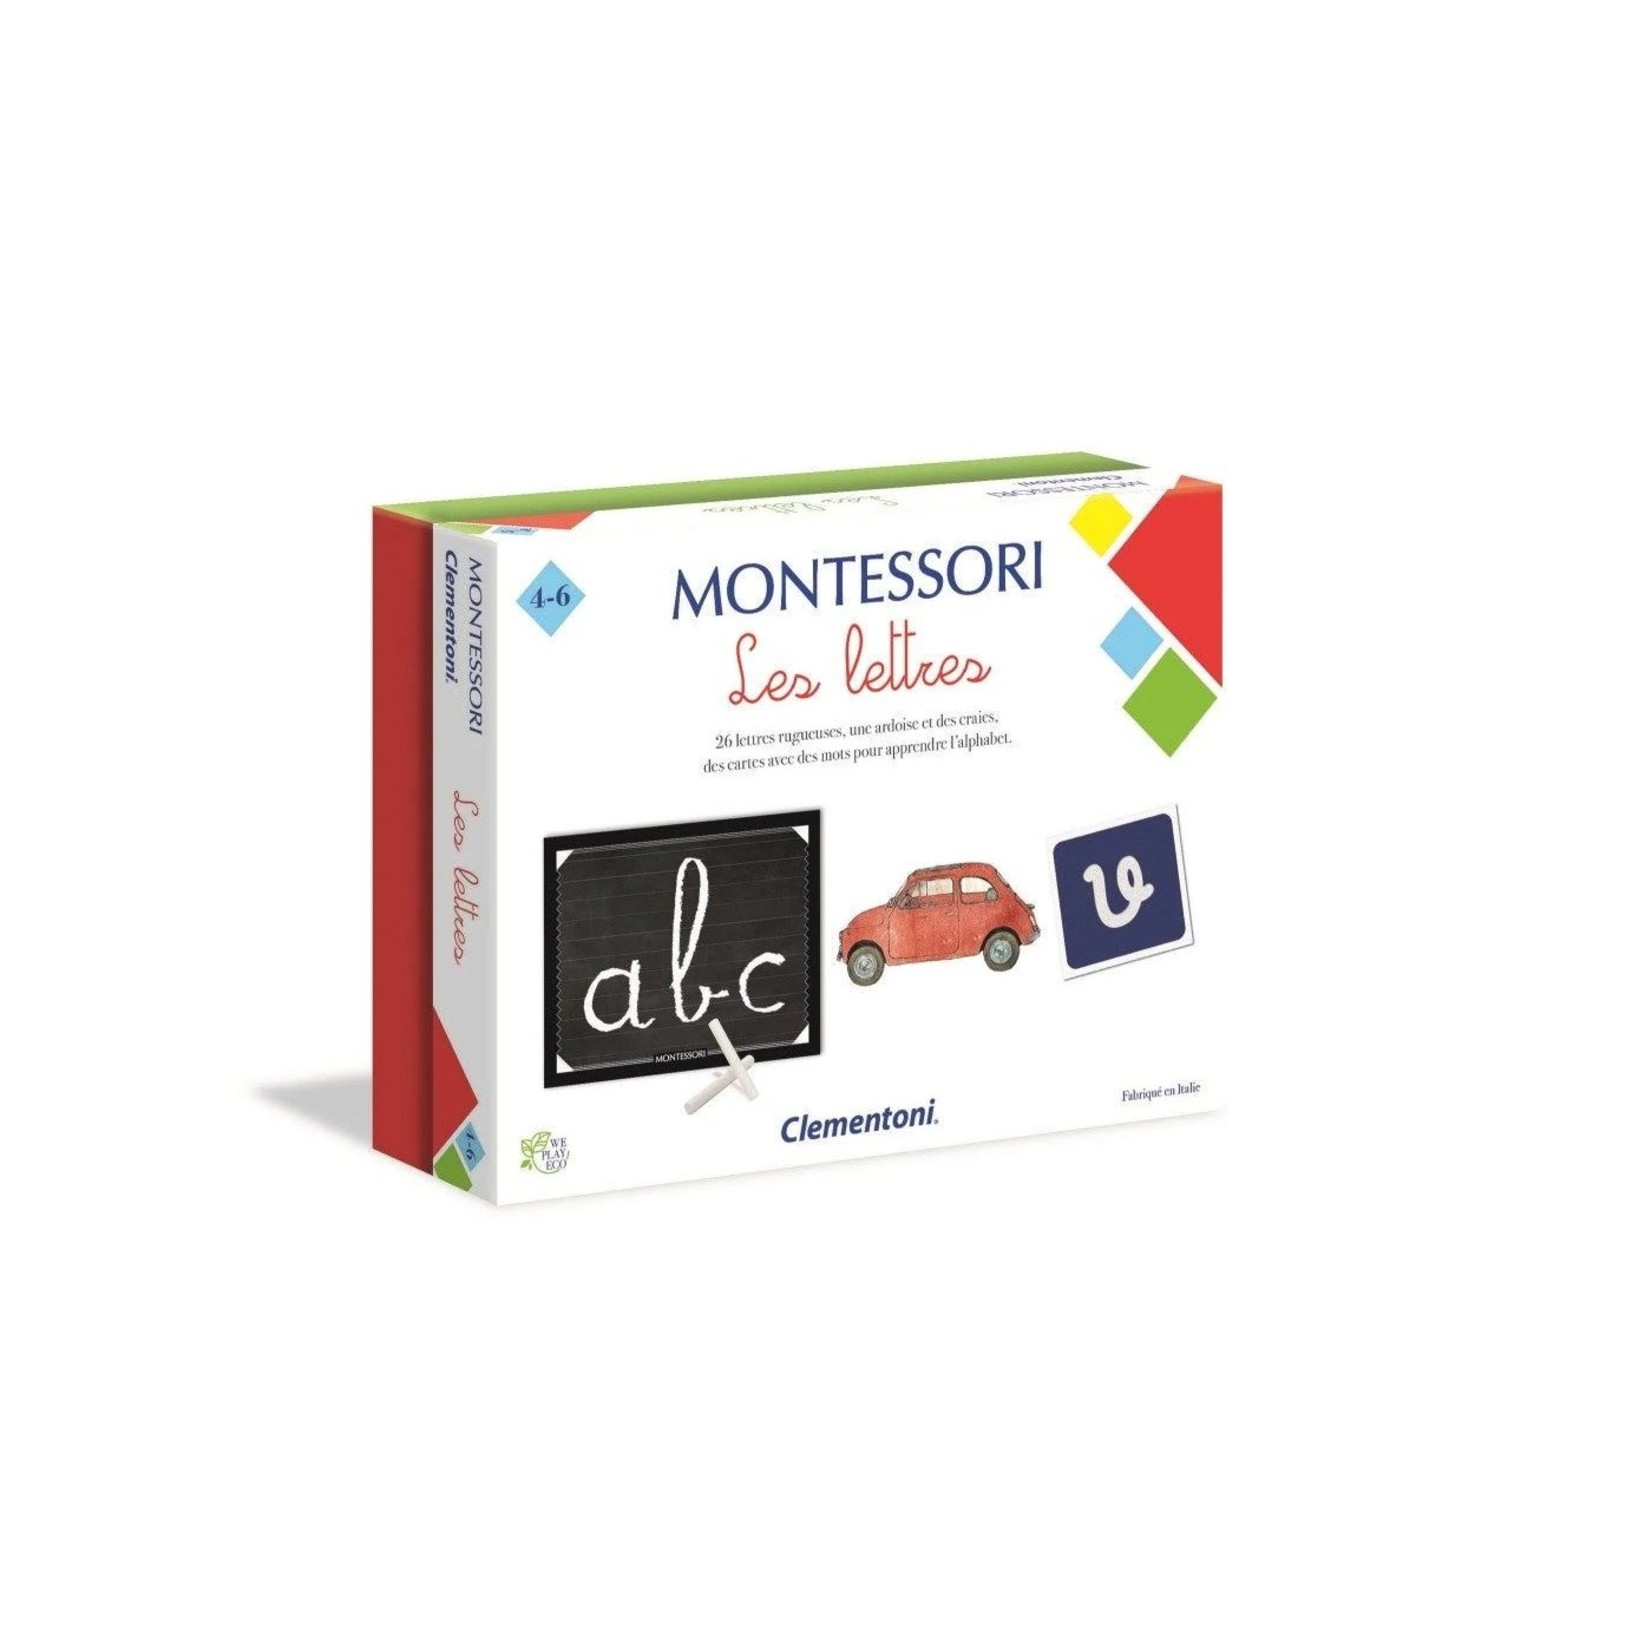 Clementoni Montessori - Les lettres